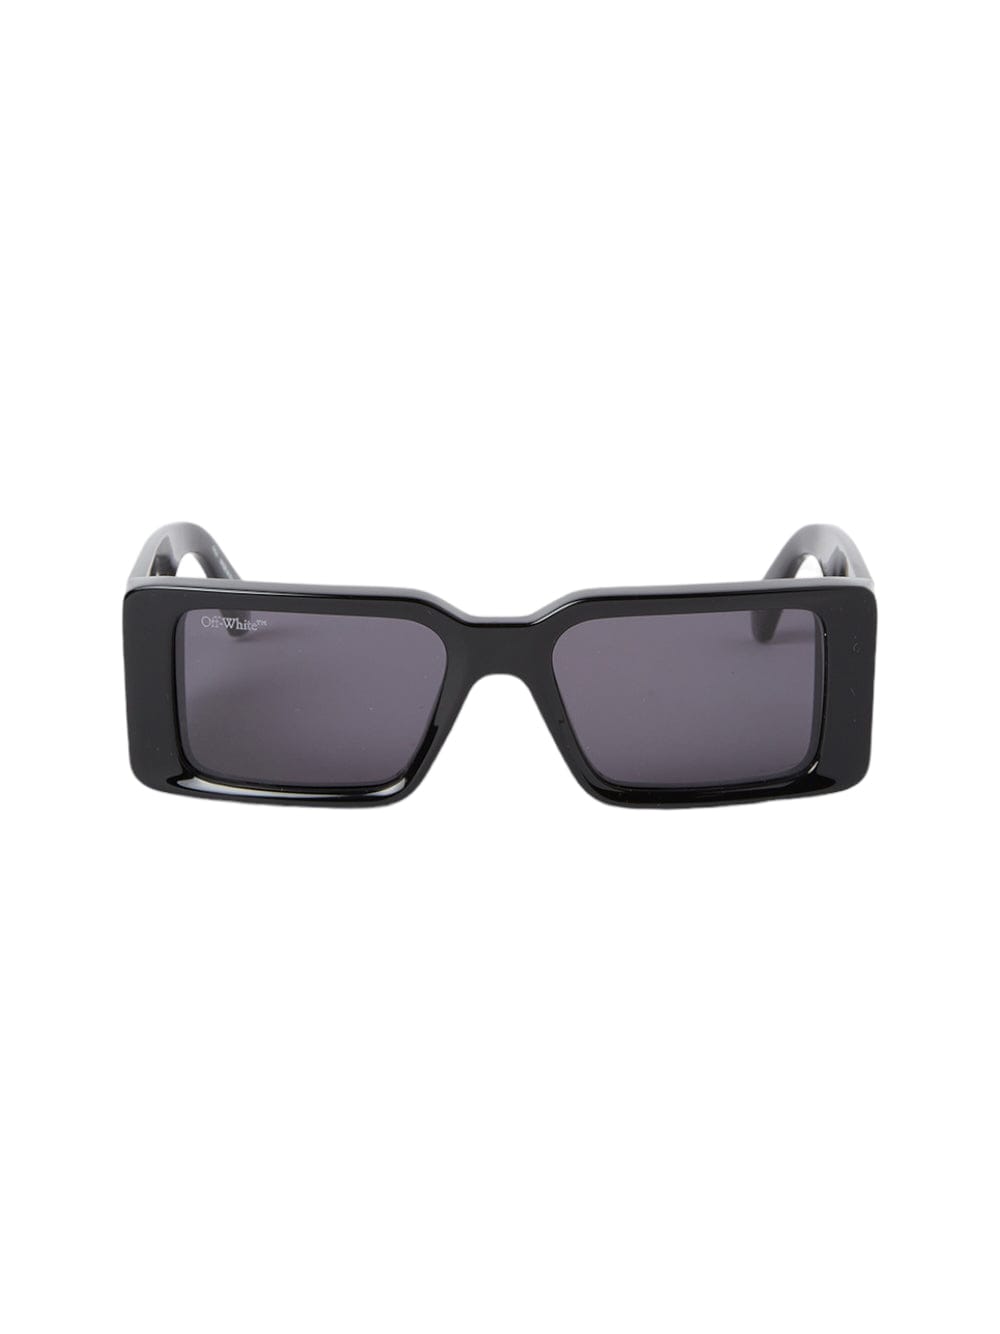 Milano - Black Sunglasses